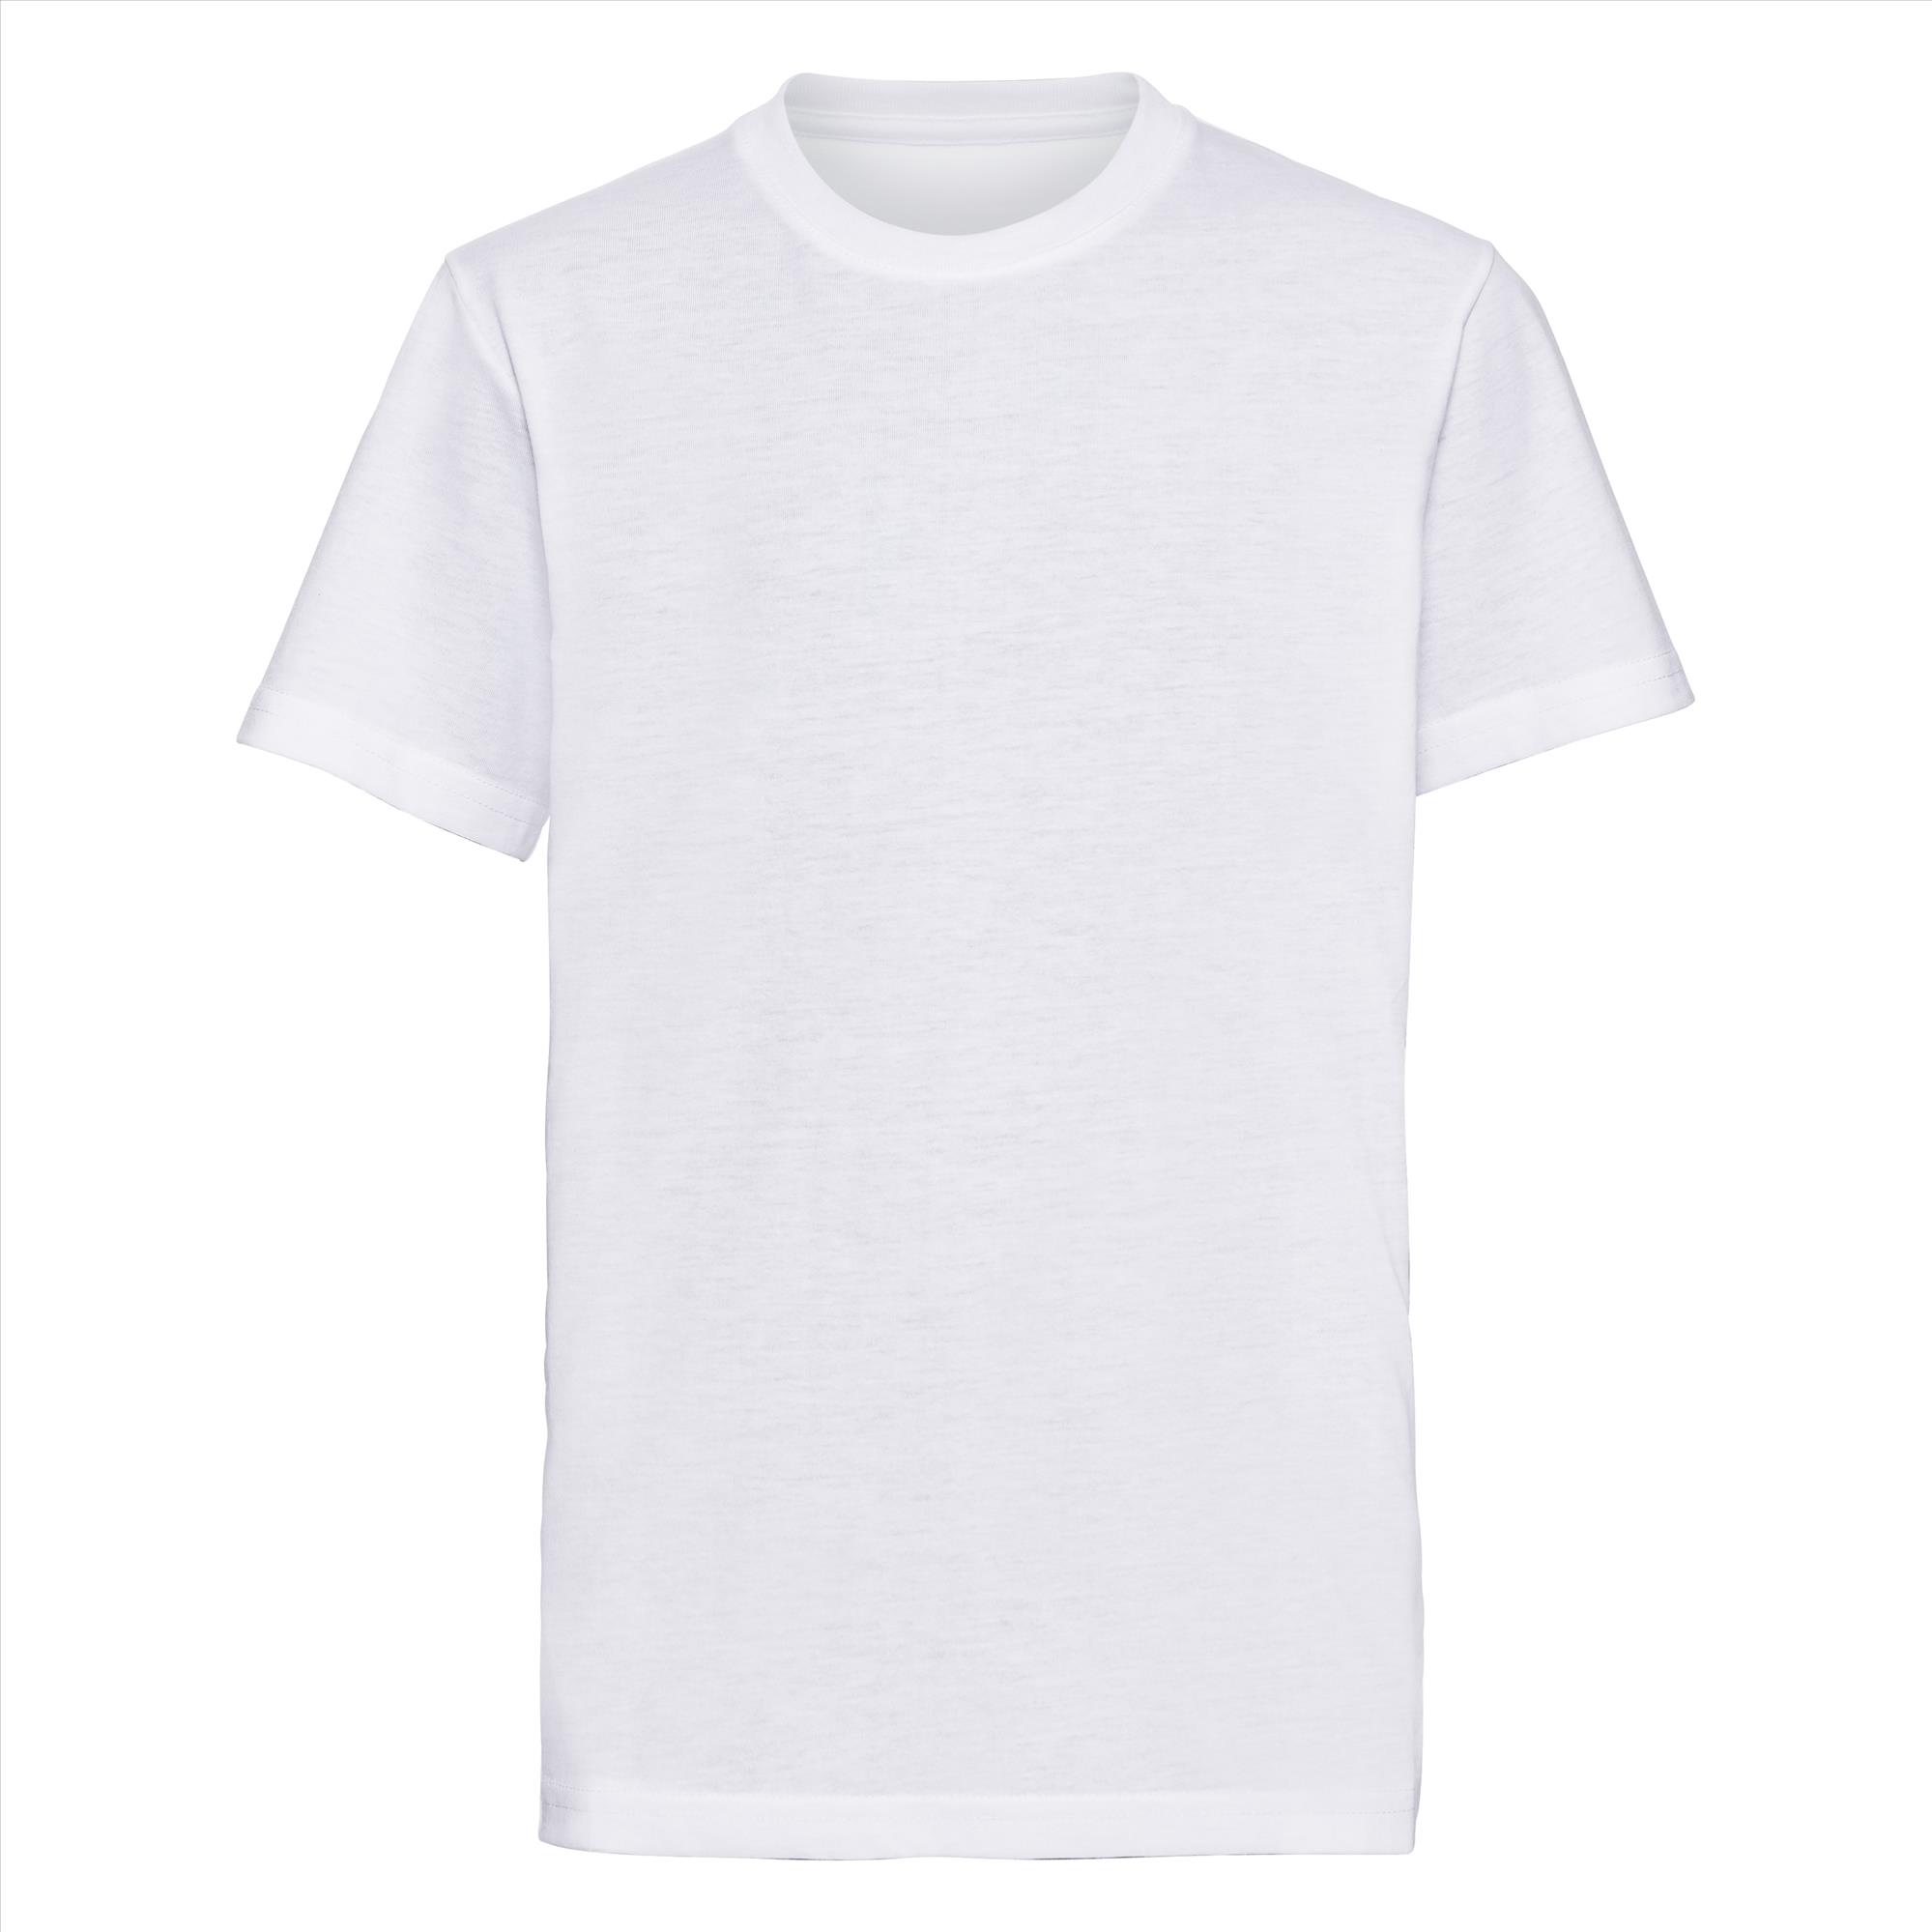 BLANK Navy Sleeve Kids Raglan Sublimatie Kindershirt Kleding Unisex kinderkleding Tops & T-shirts T-shirts T-shirts met print 